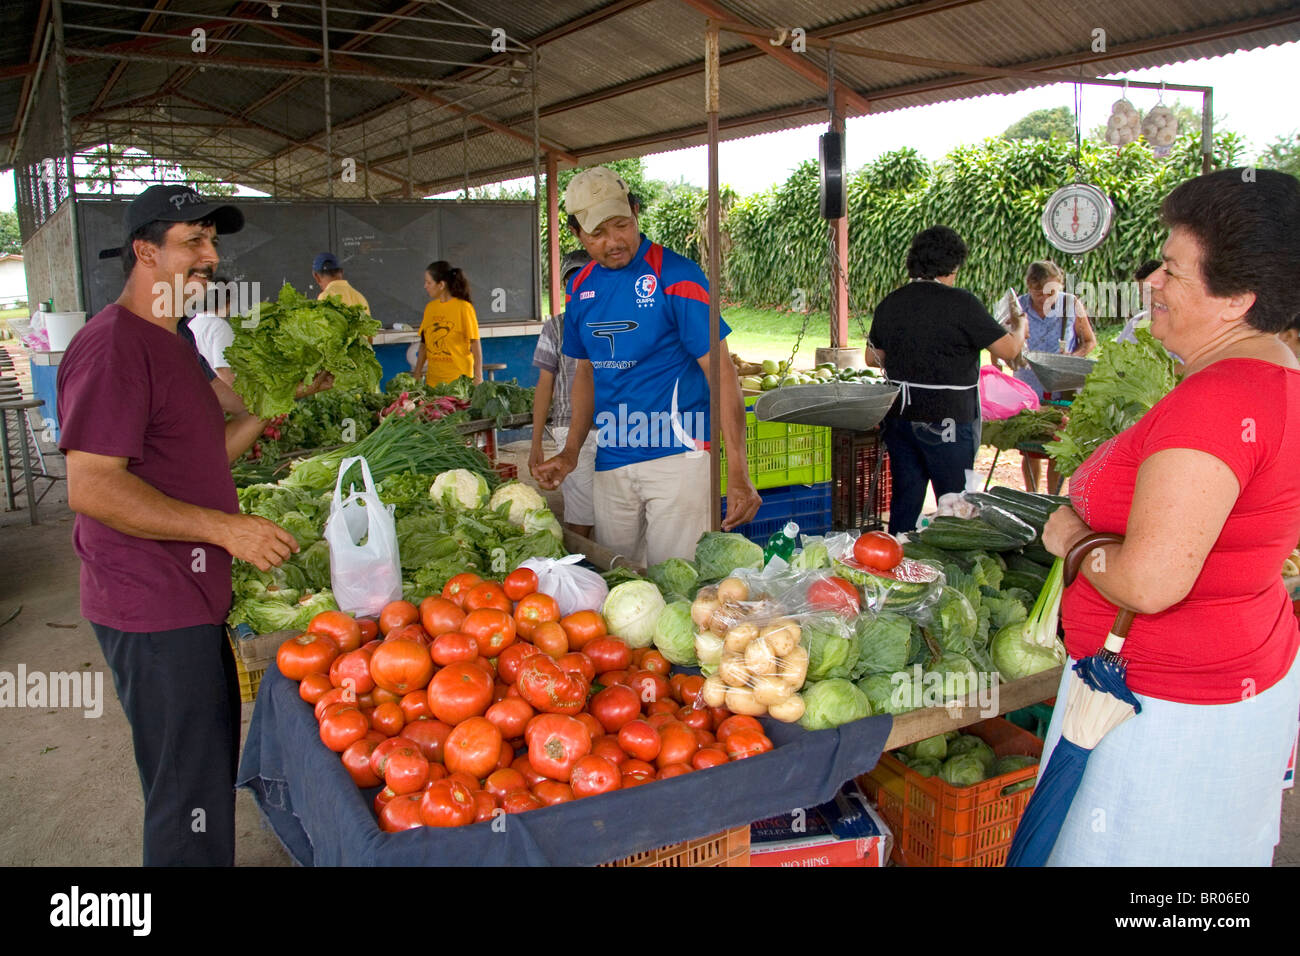 Outdoor produce market at Venecia, Costa Rica. Stock Photo